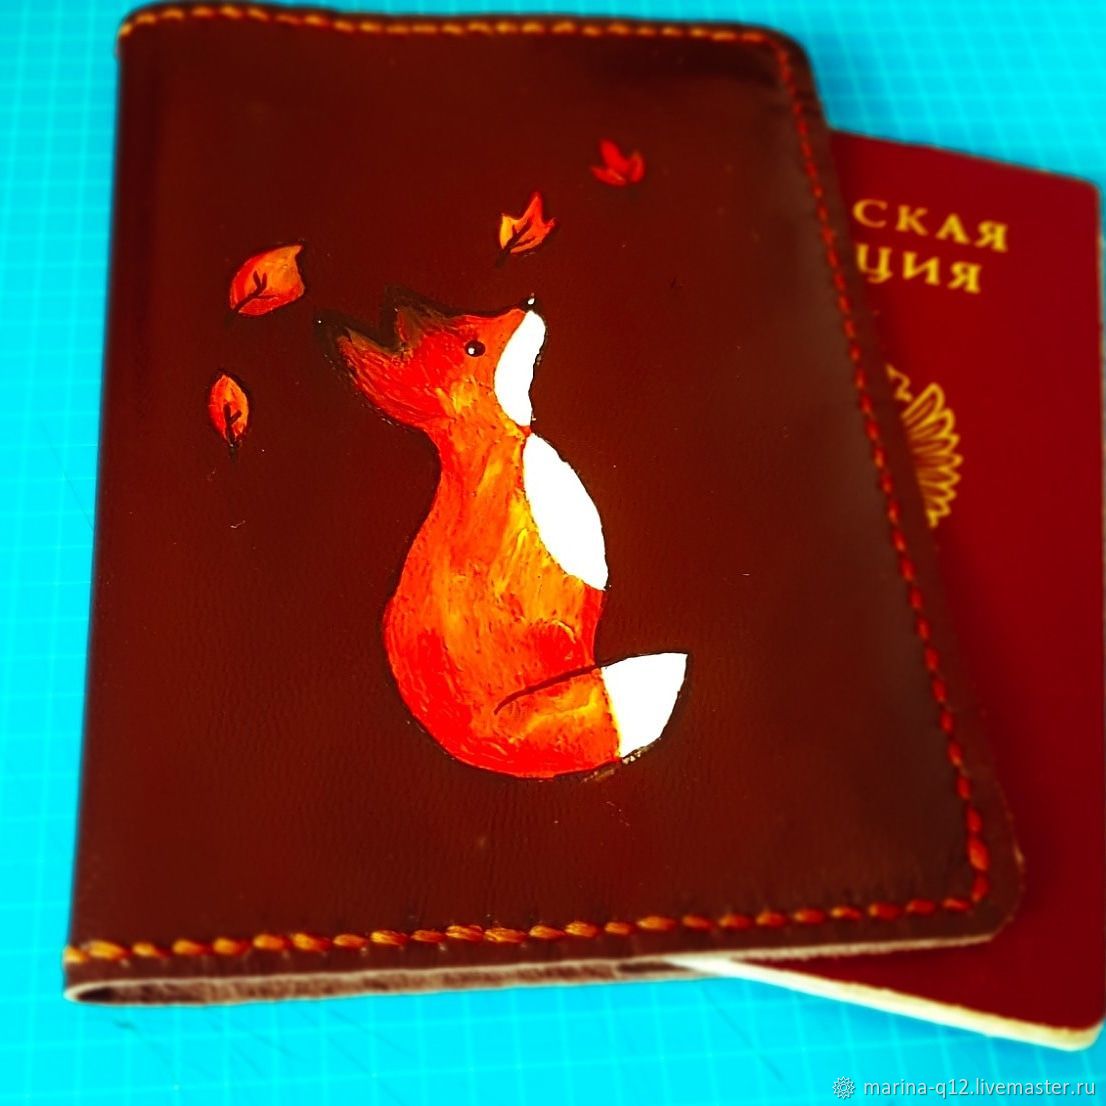 Рисунок на обложку паспорта